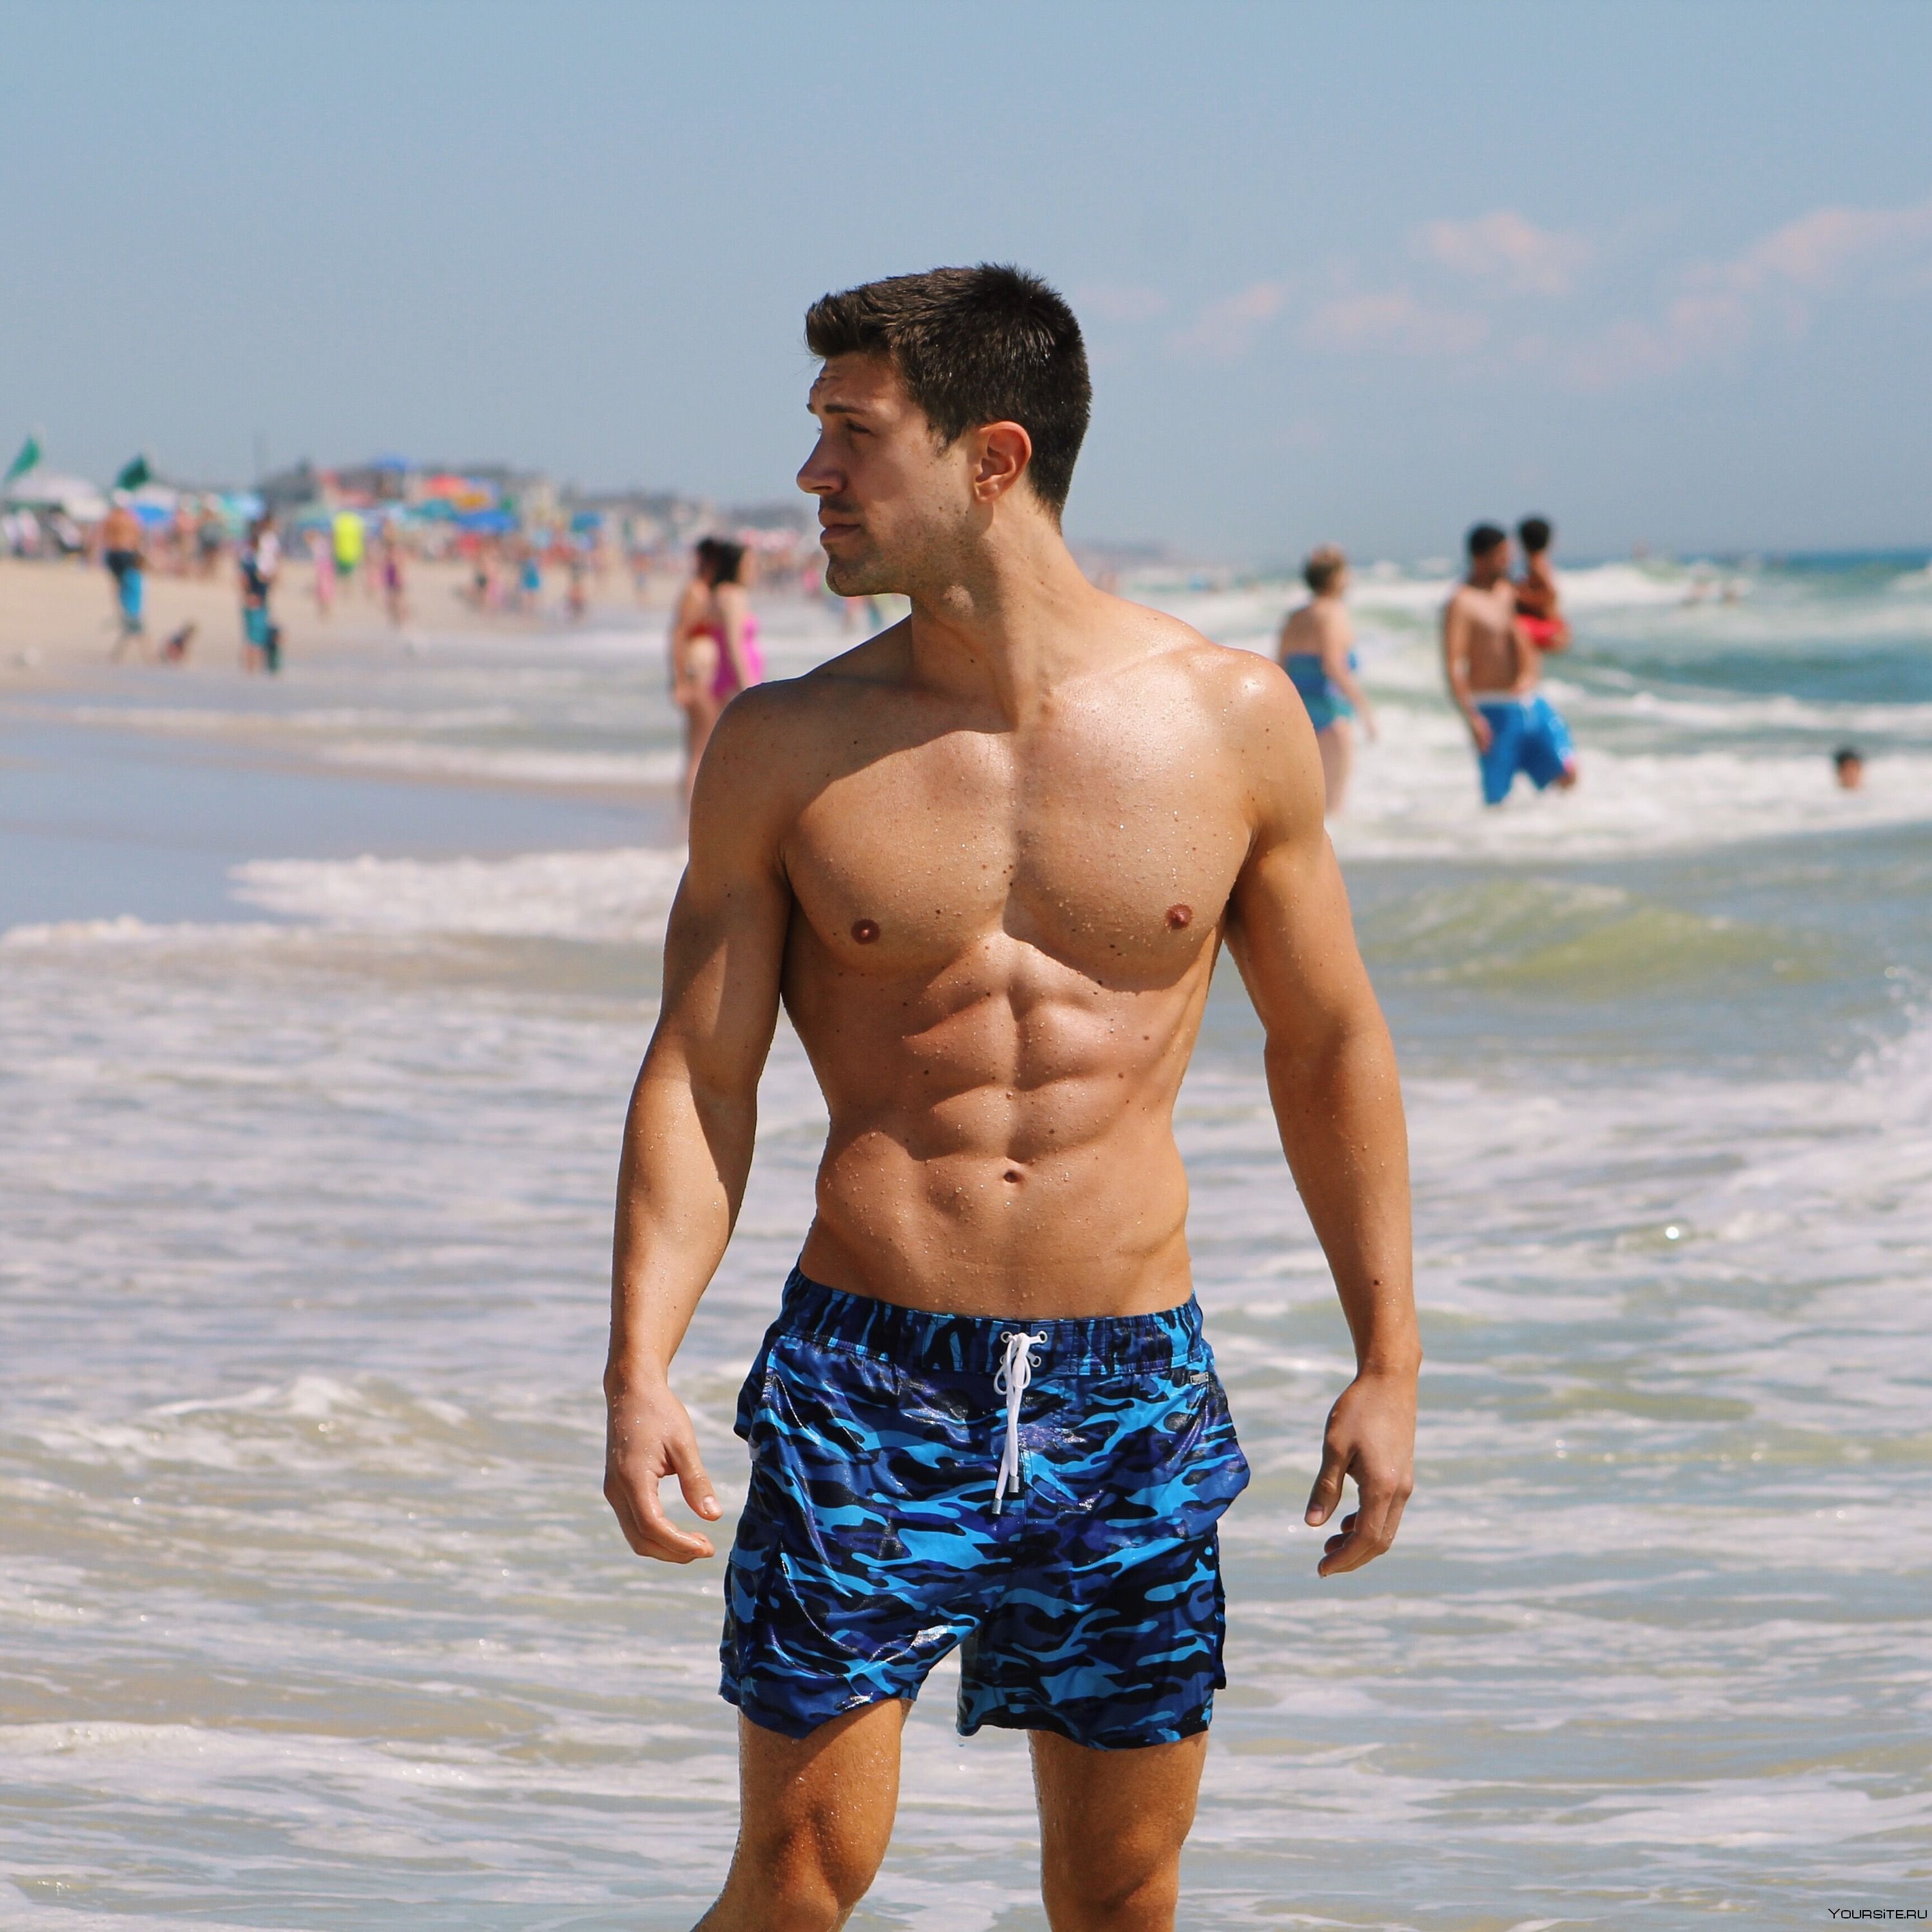 Гол пляж муж. Спортивные парни на пляже. Мужчина на пляже. Накаченные мужчины на пляже. Красивые мужчины на пляже.